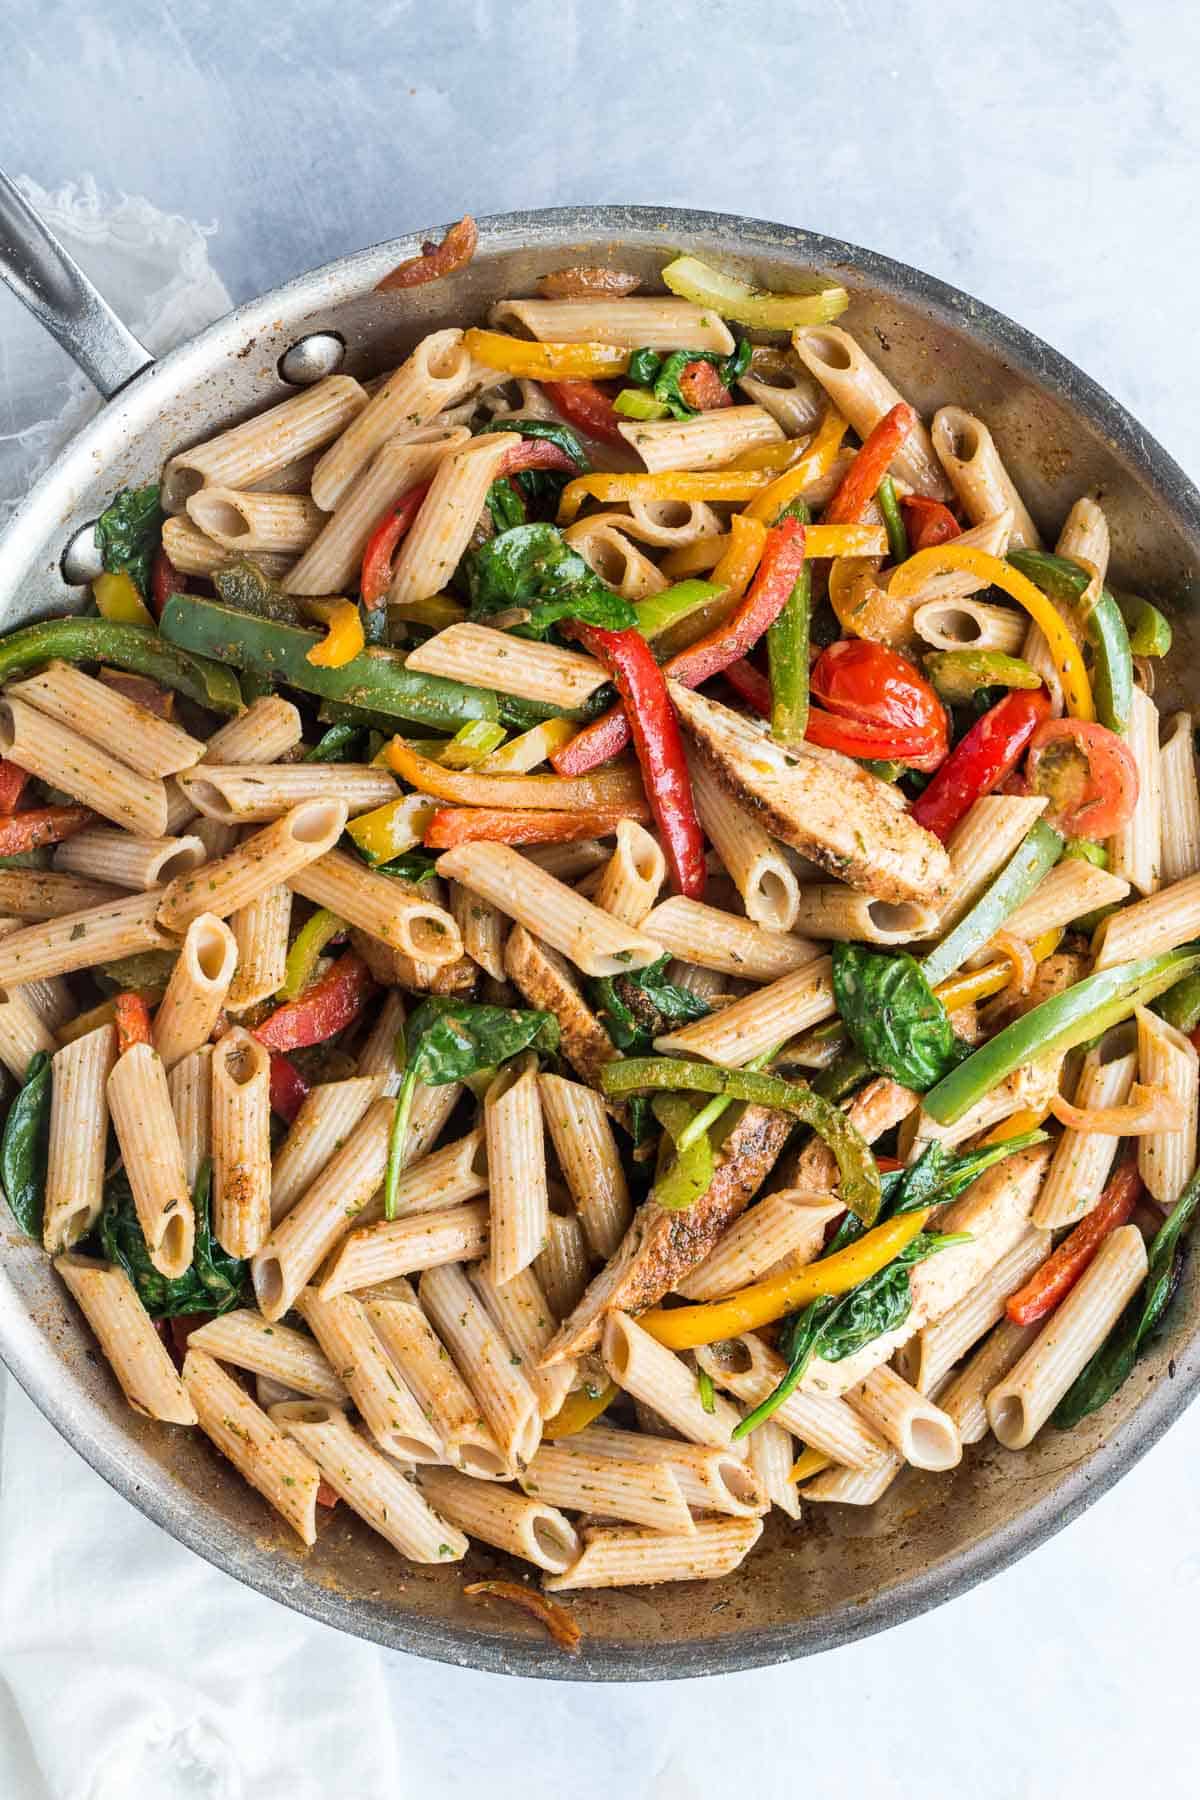 Pasta and veggies in a grey pan.